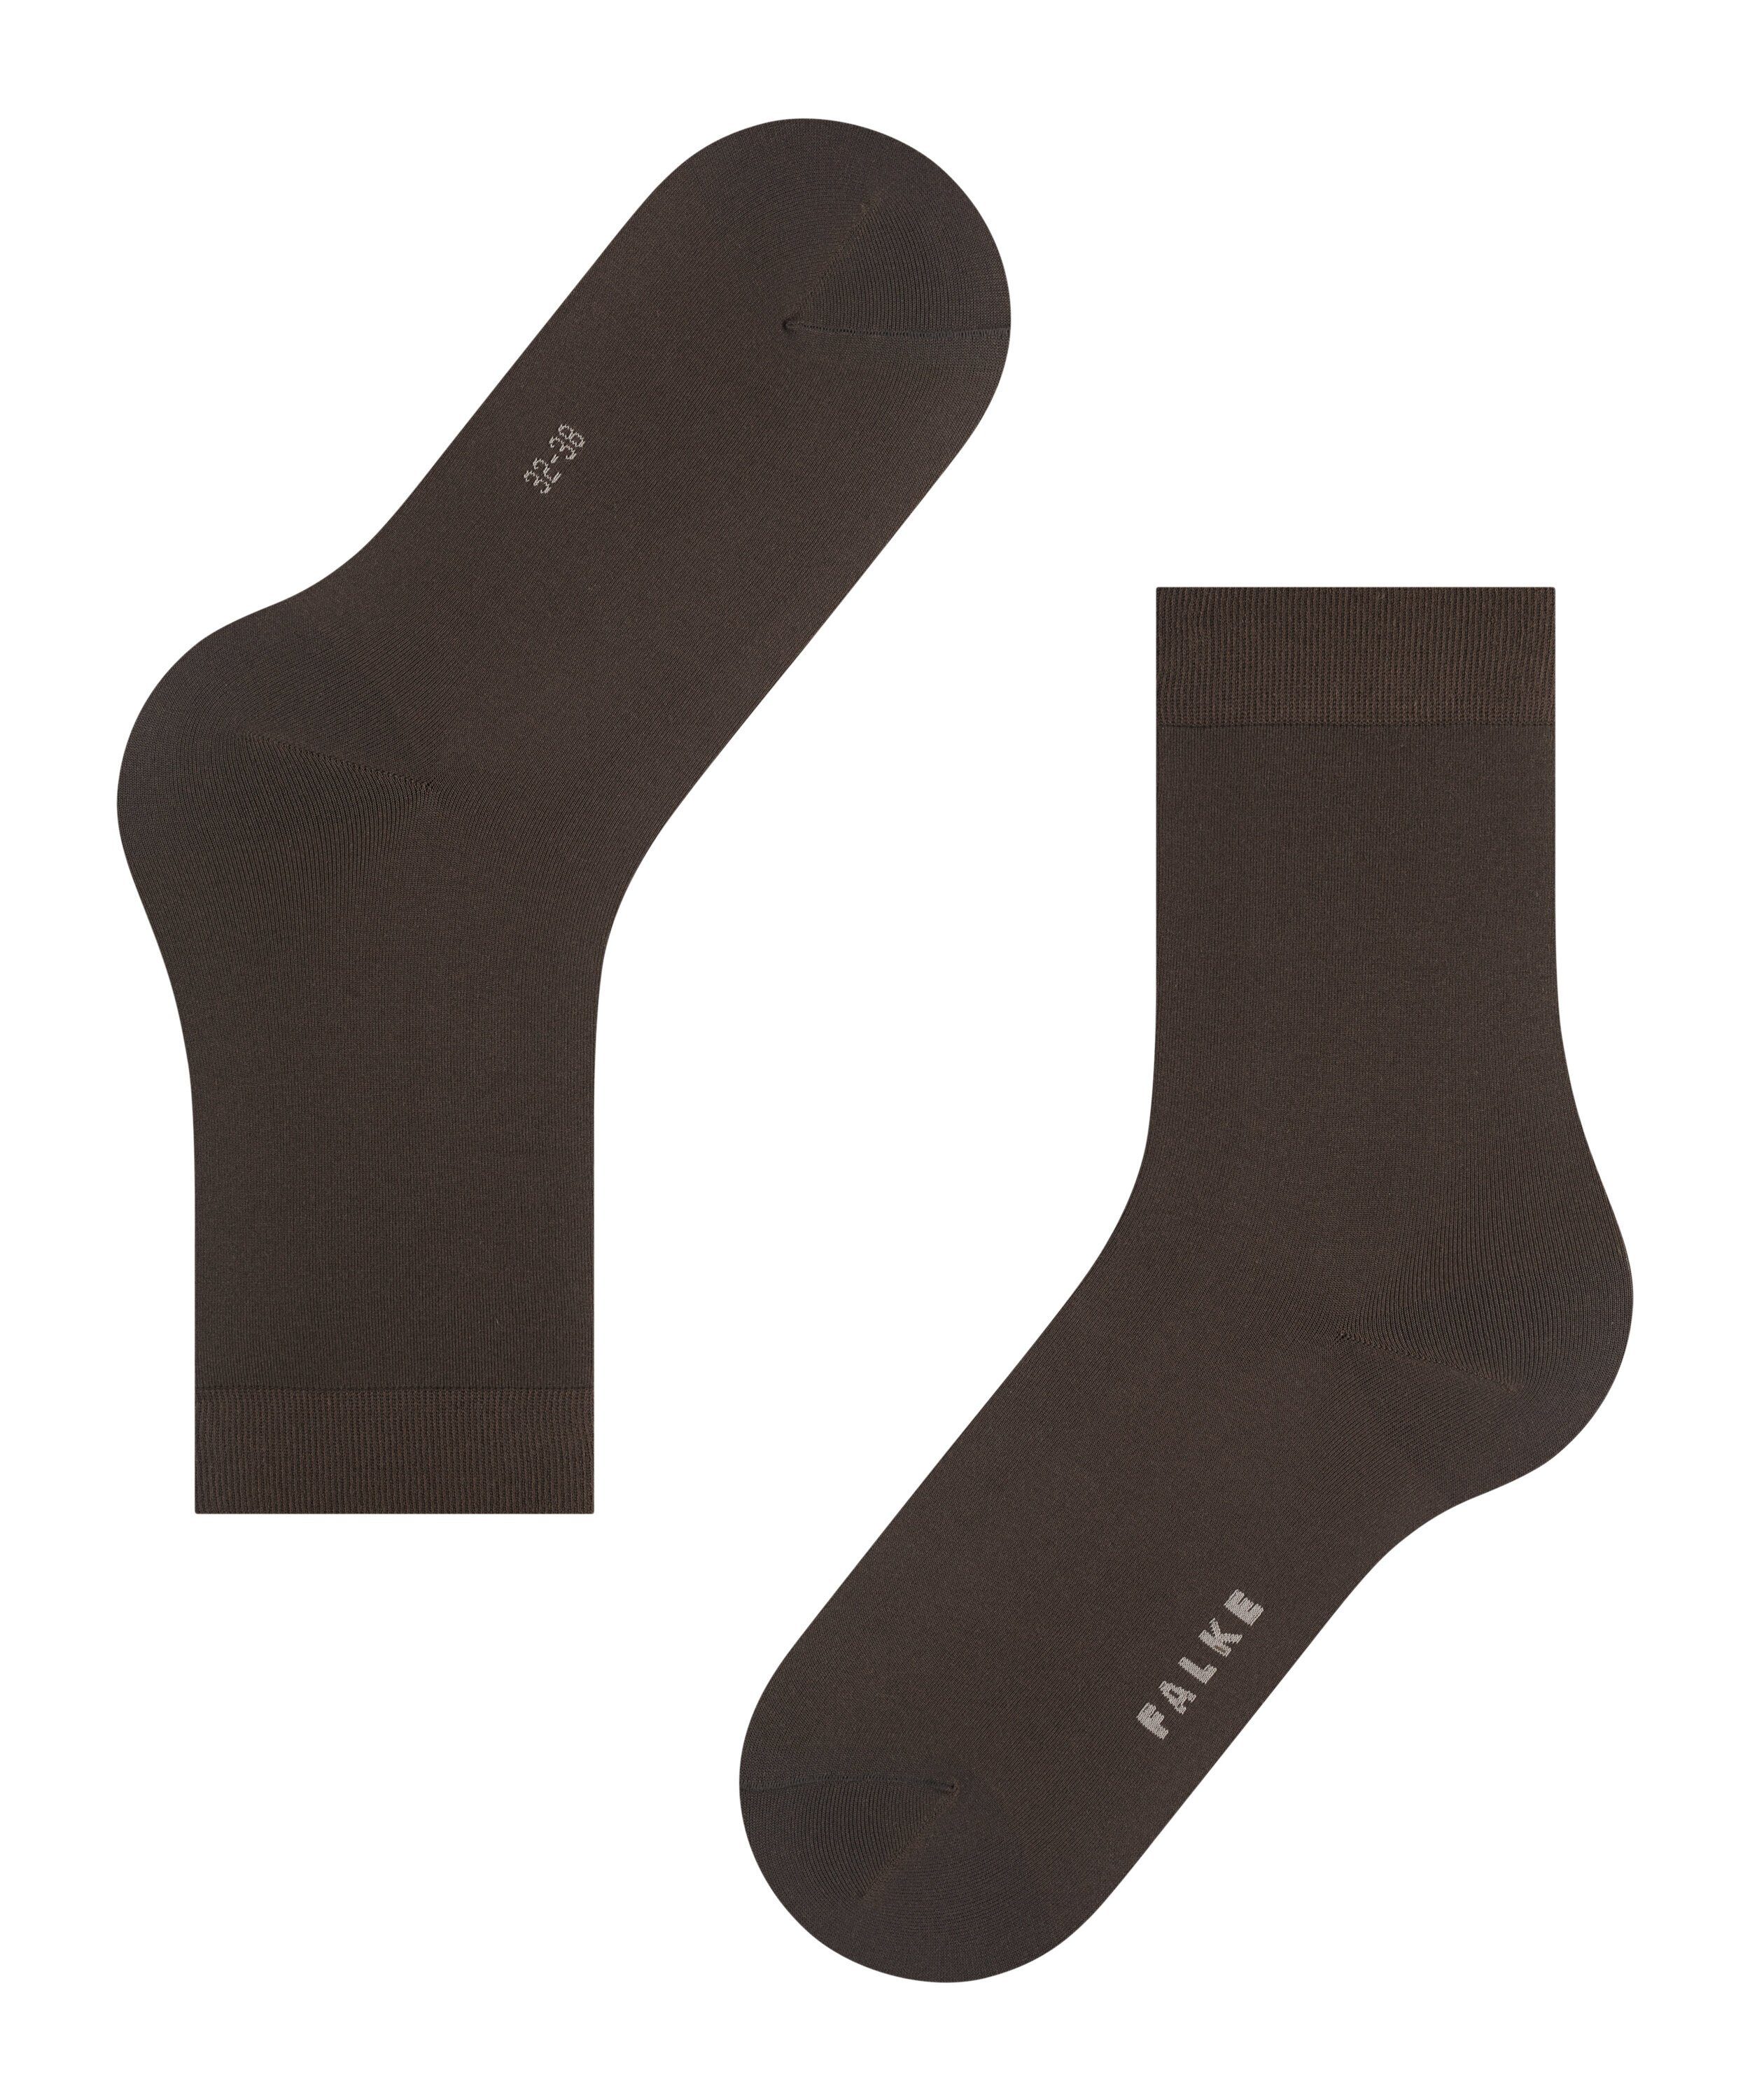 Touch FALKE Socken dark brown (1-Paar) (5233) Cotton